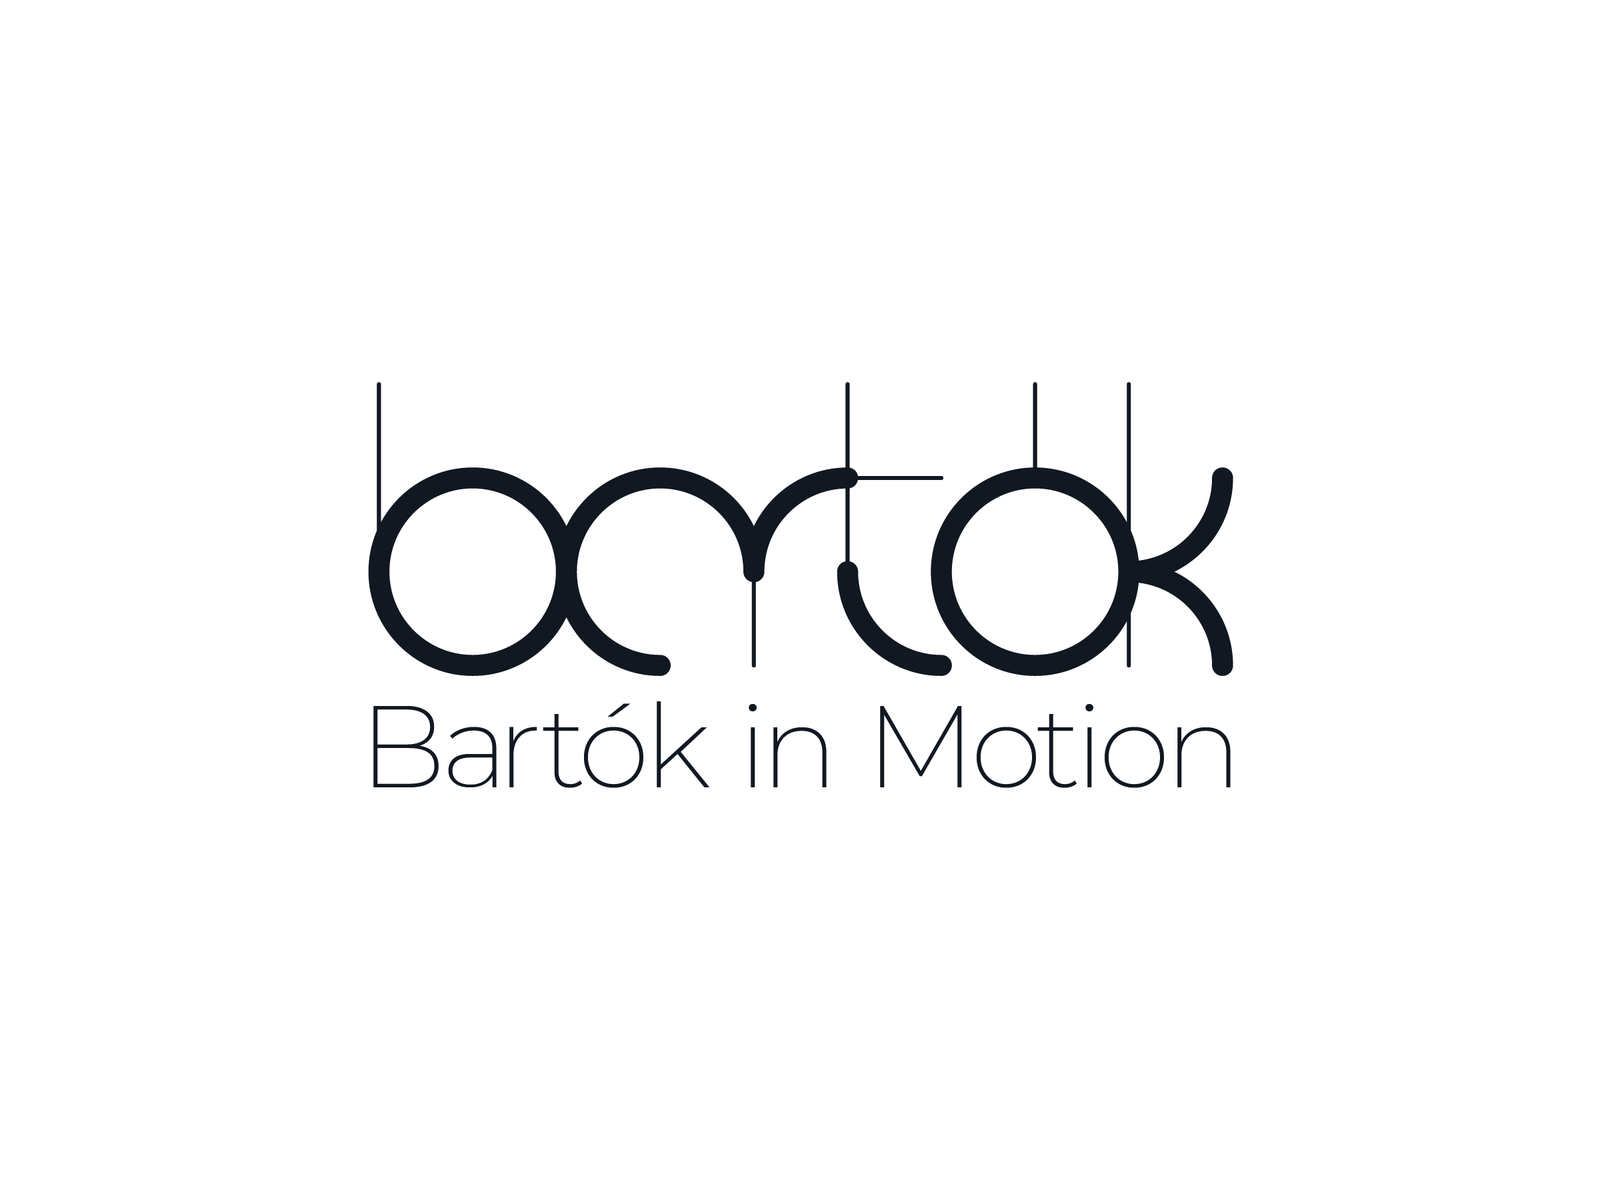 Bartók in Motion | title experiment #01 by Dániel Kérges on Dribbble